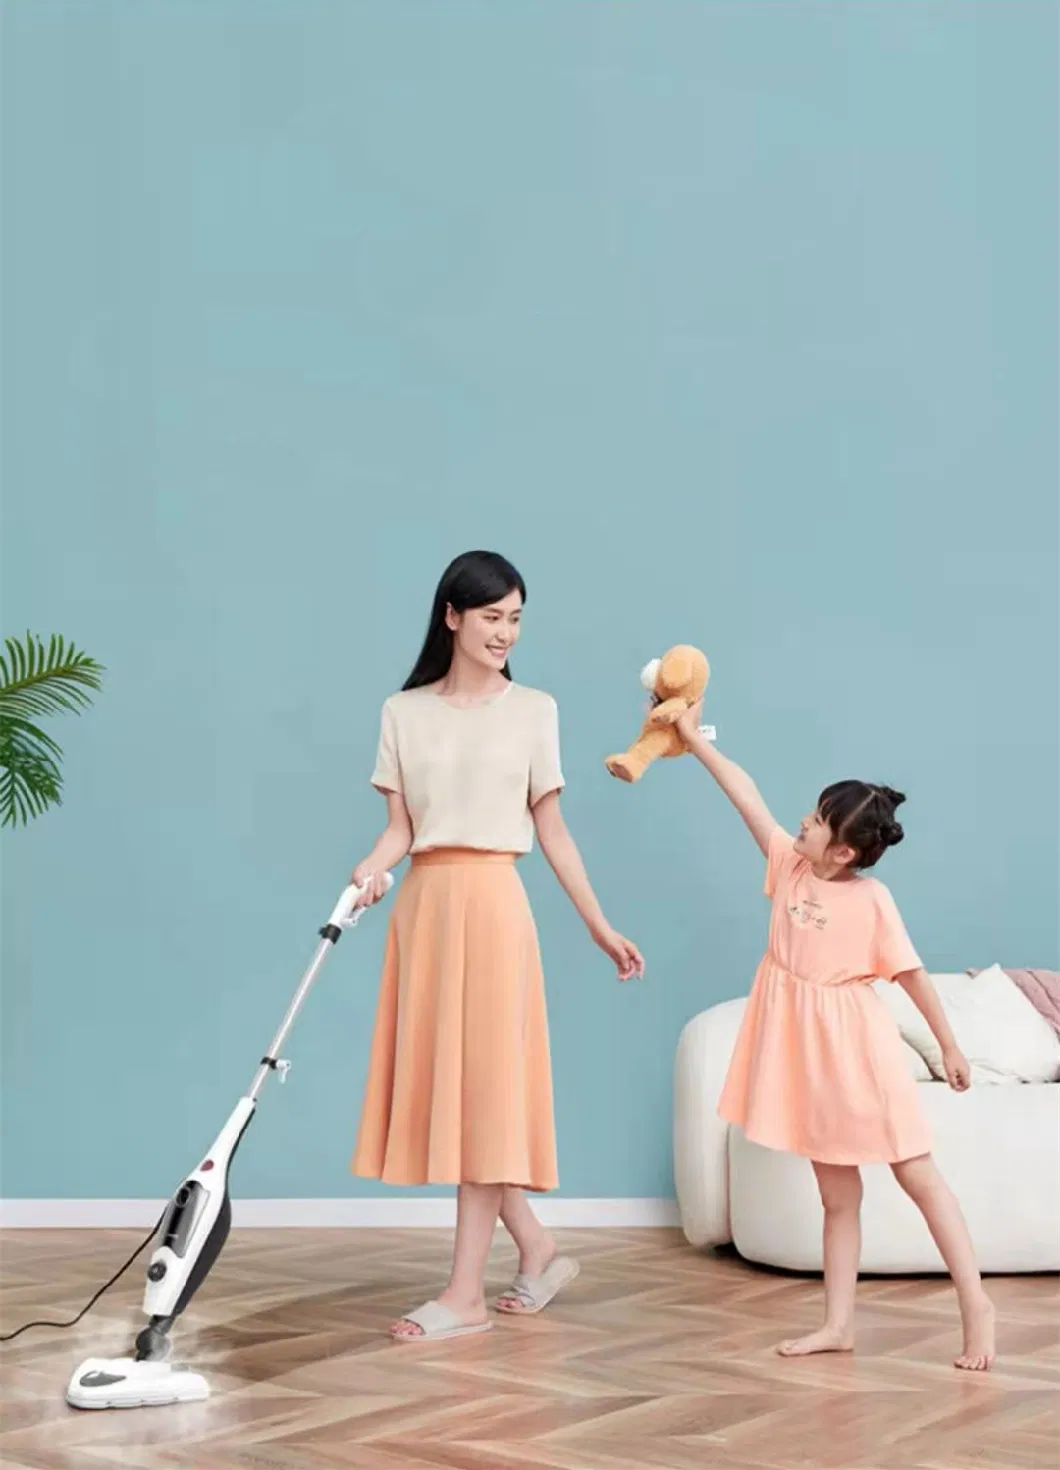 Steam Mop Convenient Detachable Steam Cleaner, Multifunctional Cleaning Machine Floor Steamer